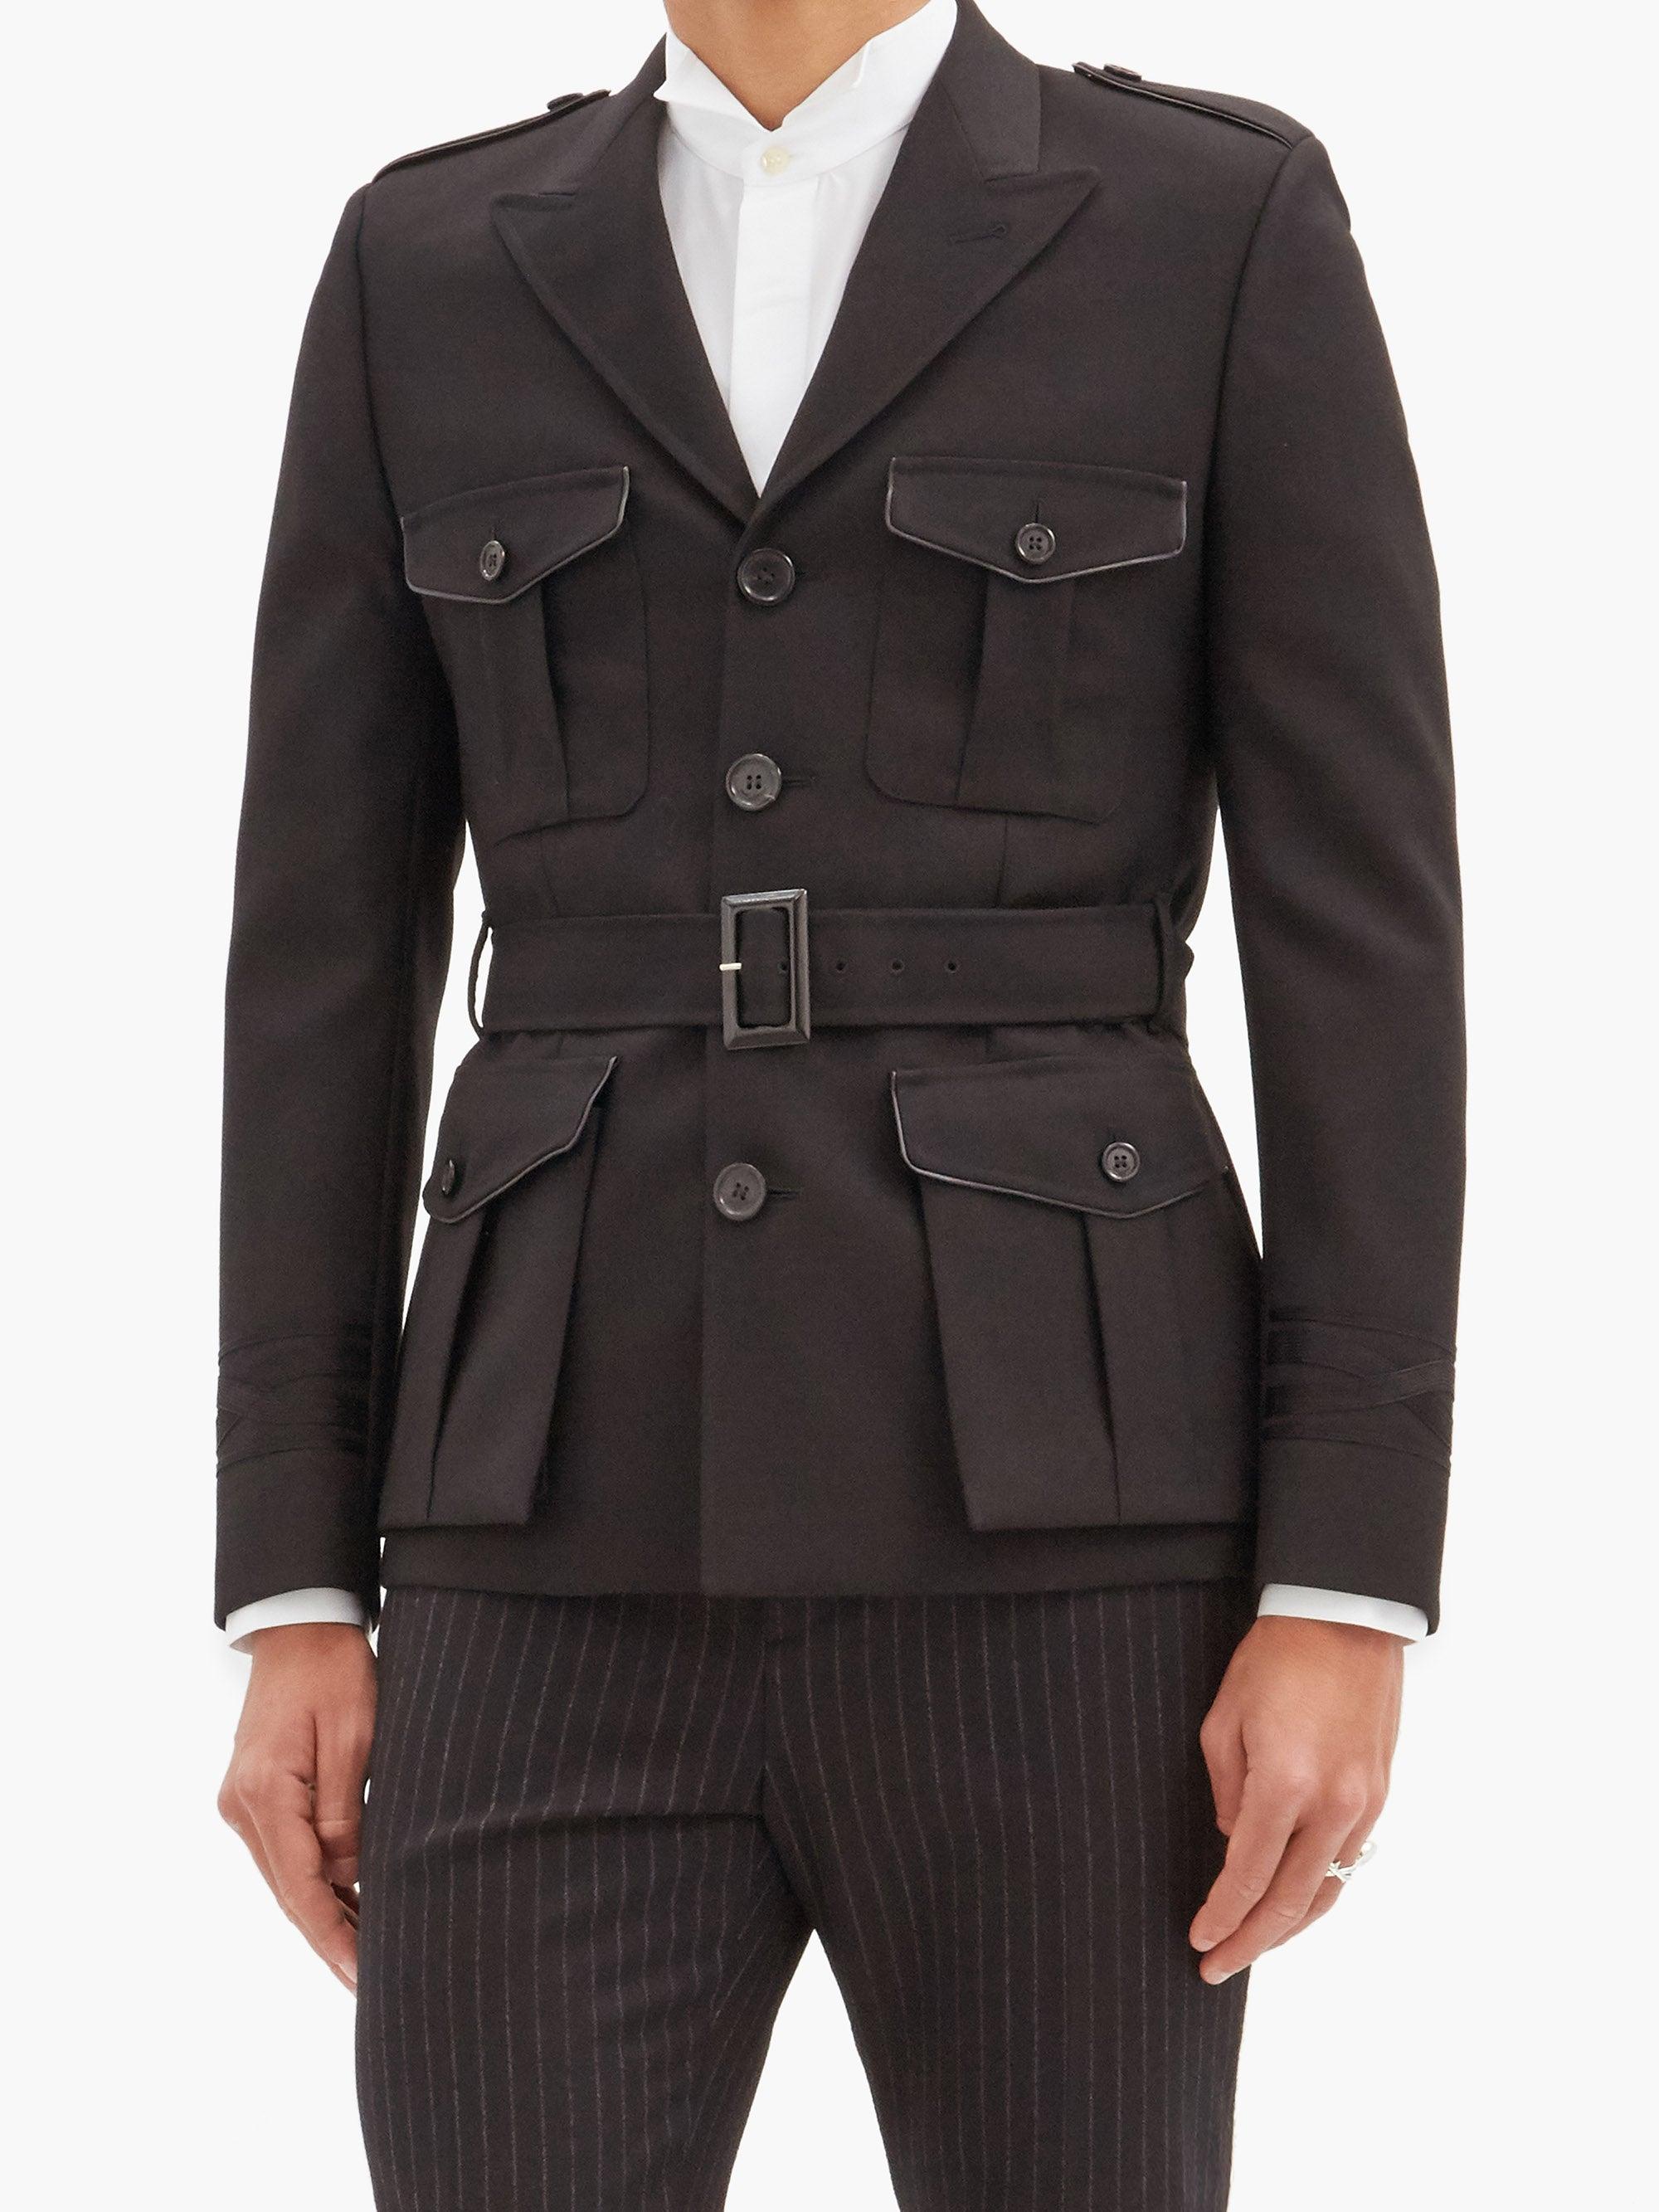 Saint Laurent Leather-trimmed Wool Safari Jacket in Black for Men - Lyst